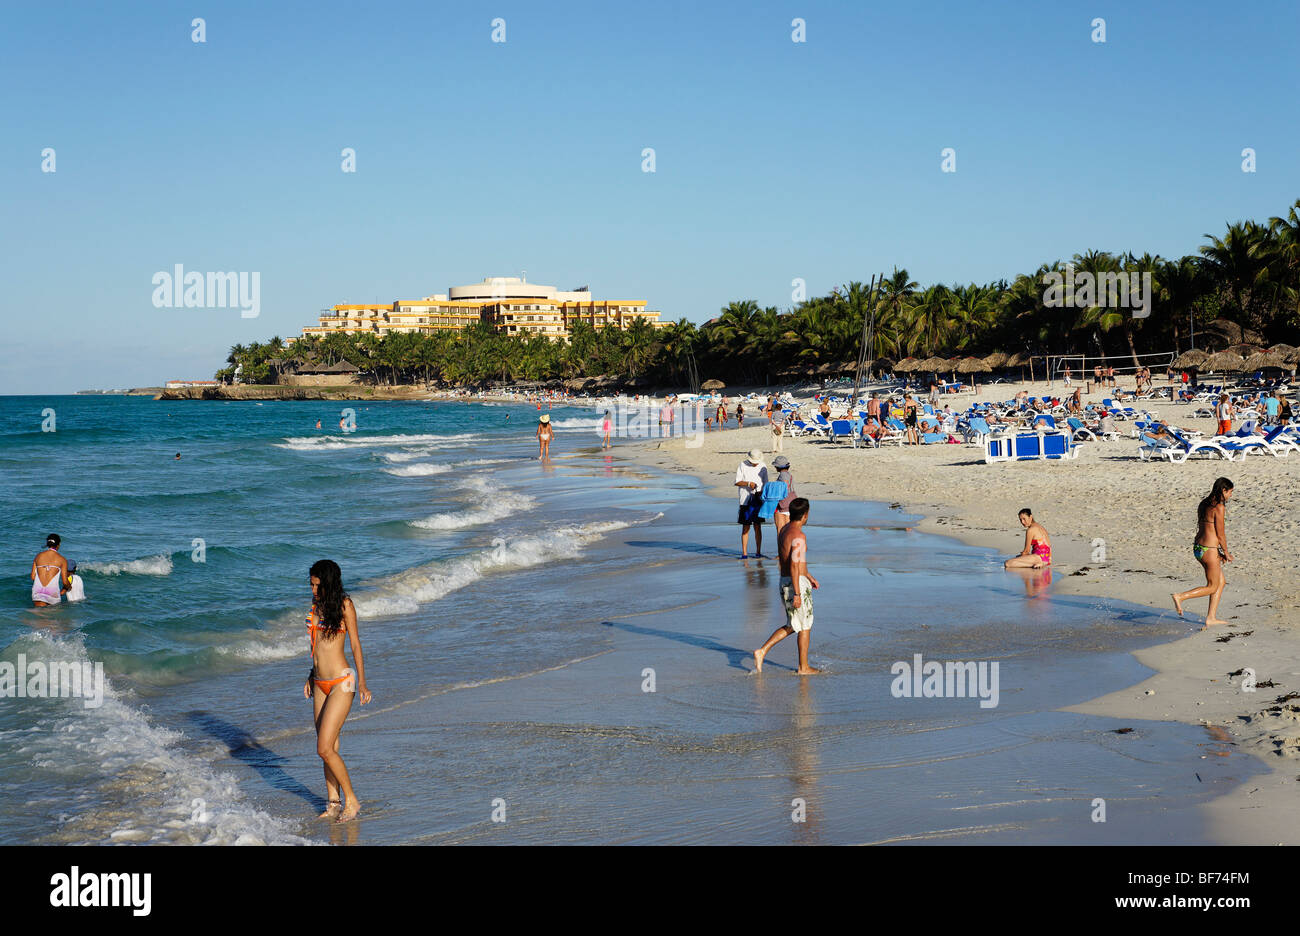 Menschen am Strand, Hotel Melia Varadero in Hintergrund, Varadero, Matanzas, Kuba, Karibik Stockfoto